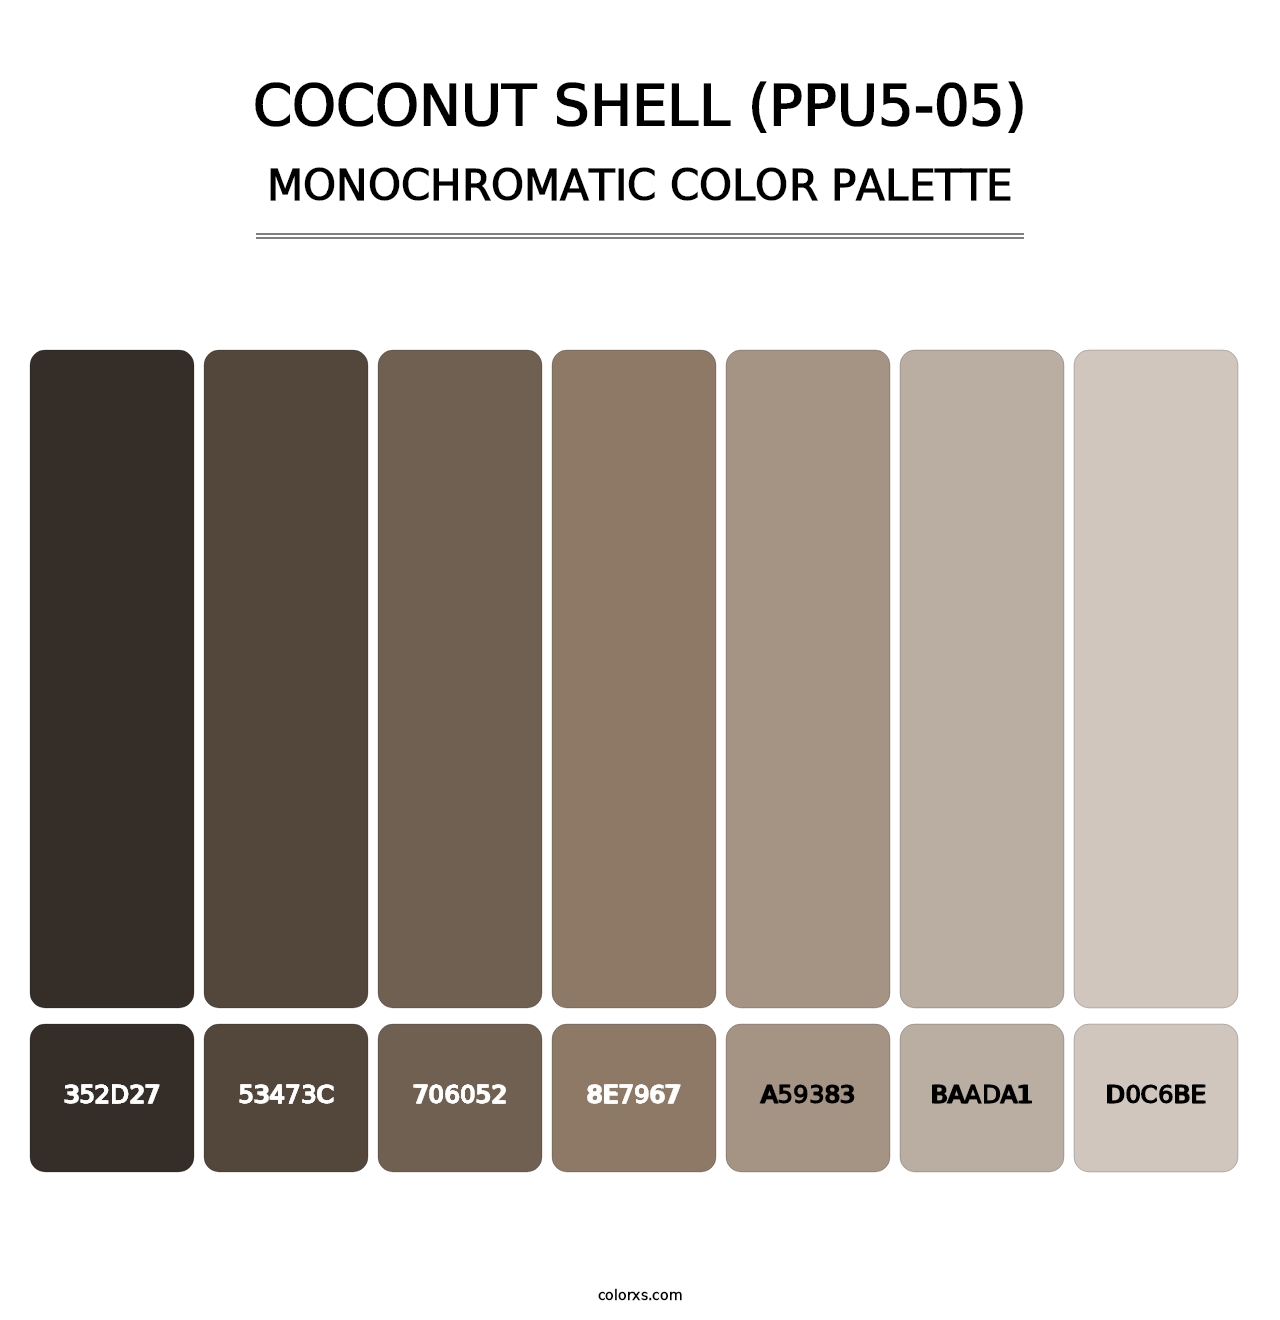 Coconut Shell (PPU5-05) - Monochromatic Color Palette